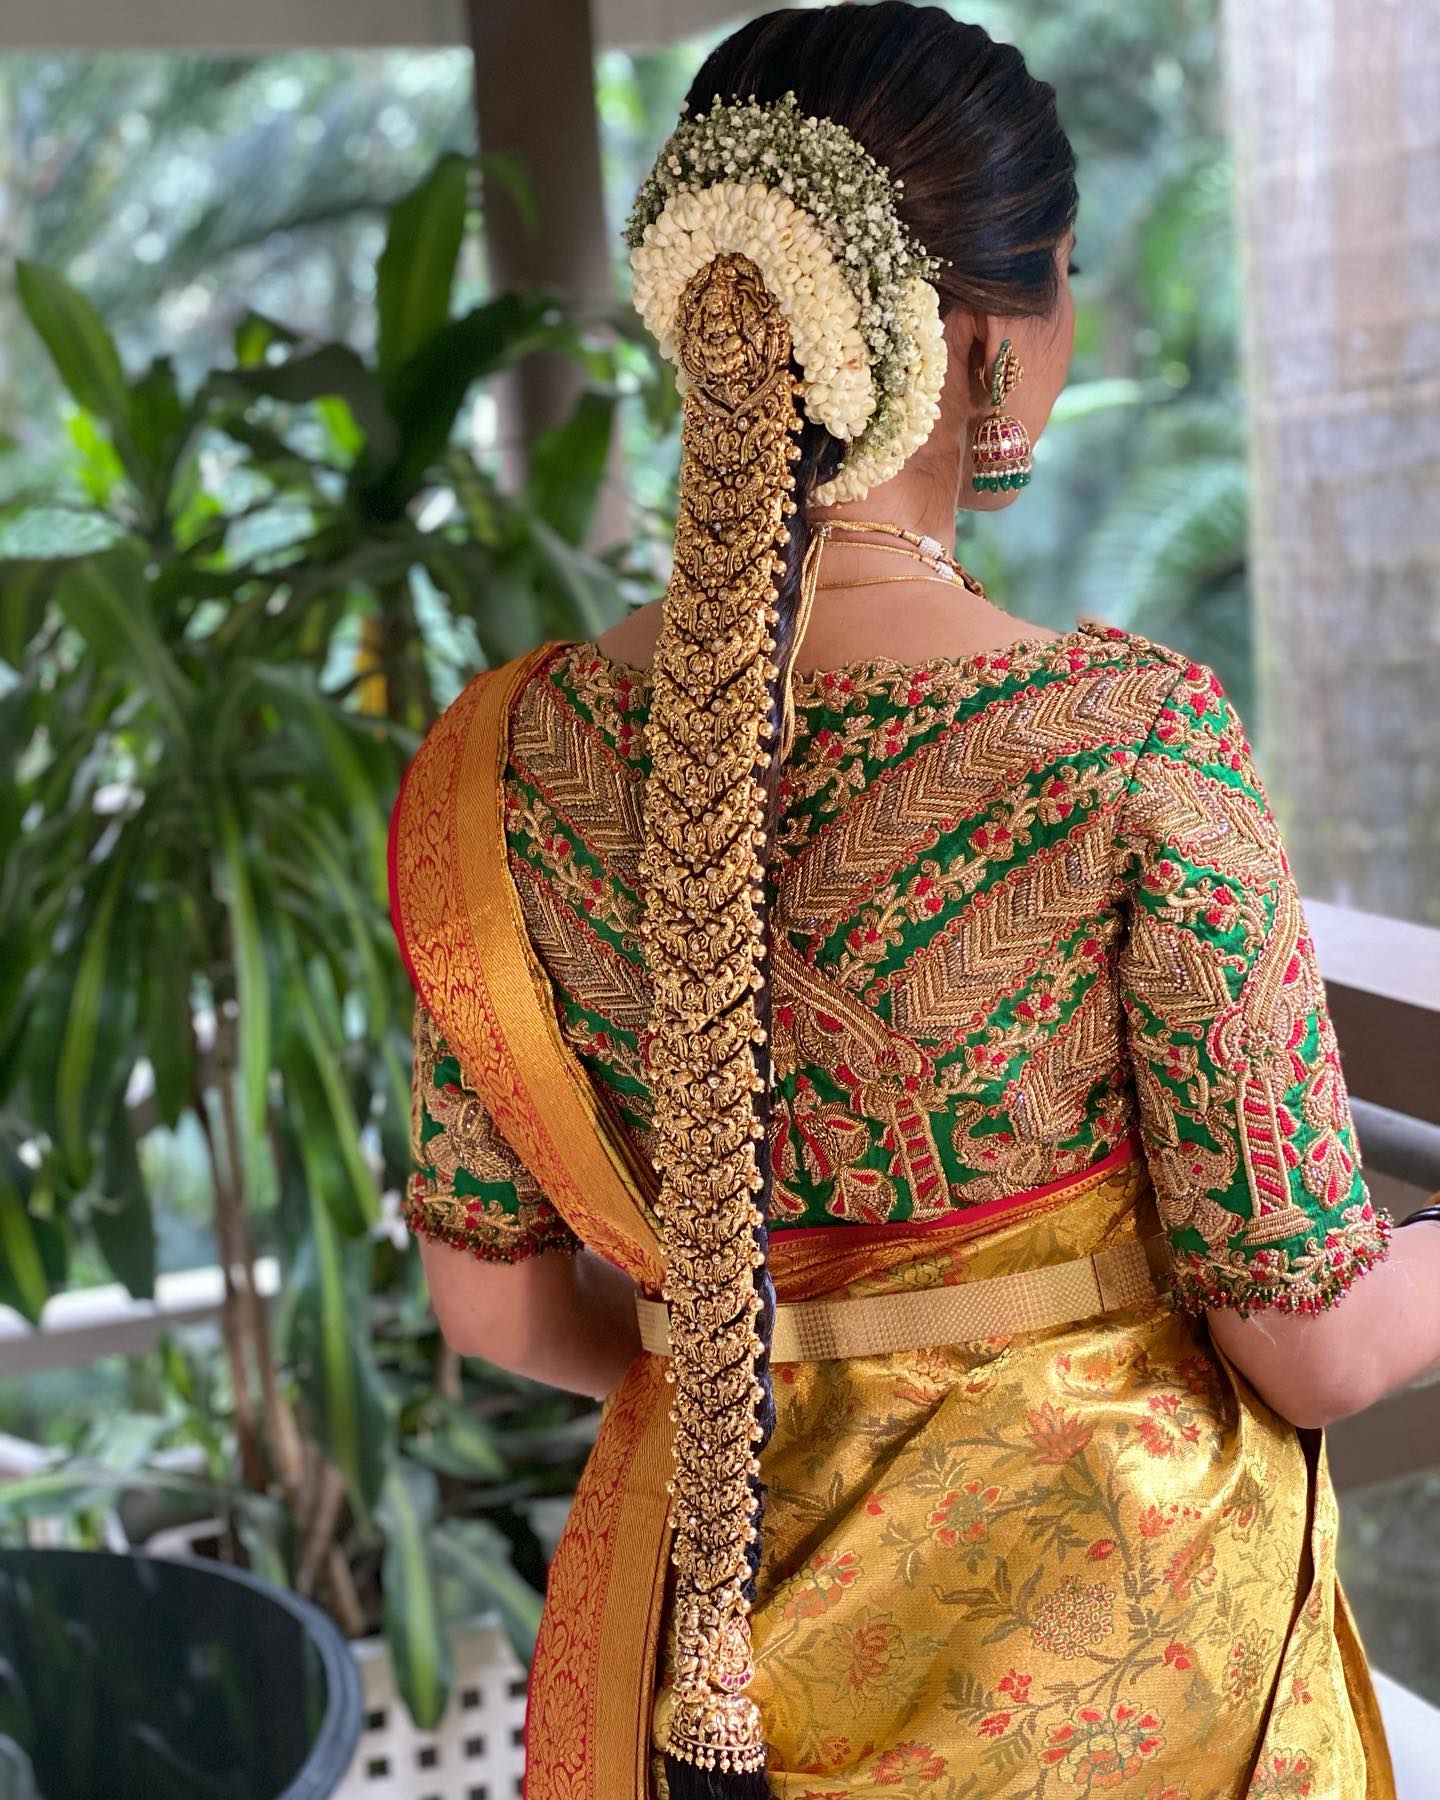 make-up-&-hair-do - Shopzters | Indian bridal hairstyles, South indian  wedding hairstyles, Bridal hairstyle indian wedding